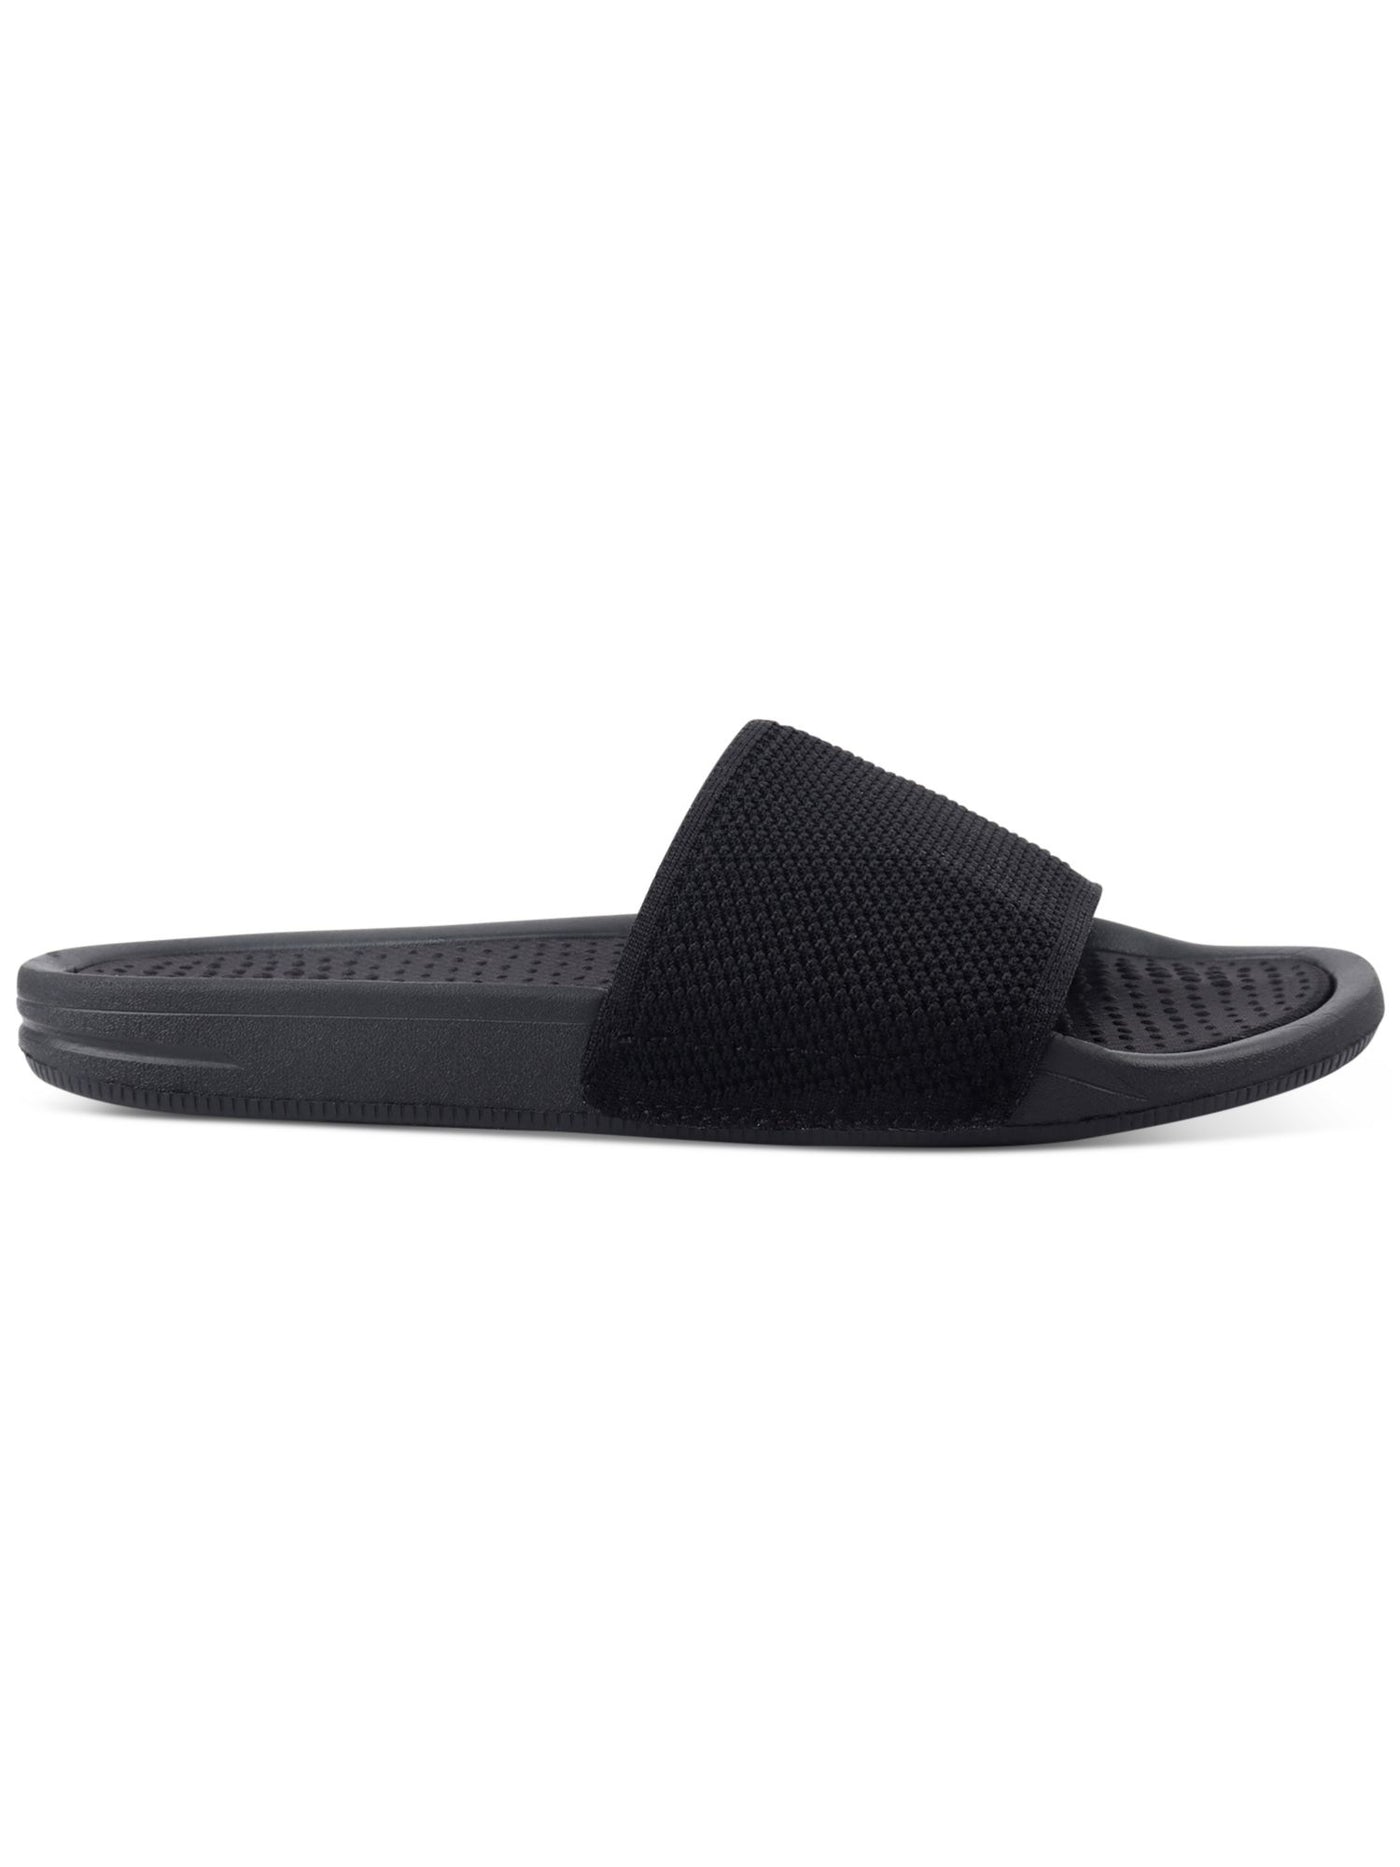 ALFANI Mens Black Knit Cushioned Comfort Ace Round Toe Platform Slip On Slide Sandals Shoes 9 M